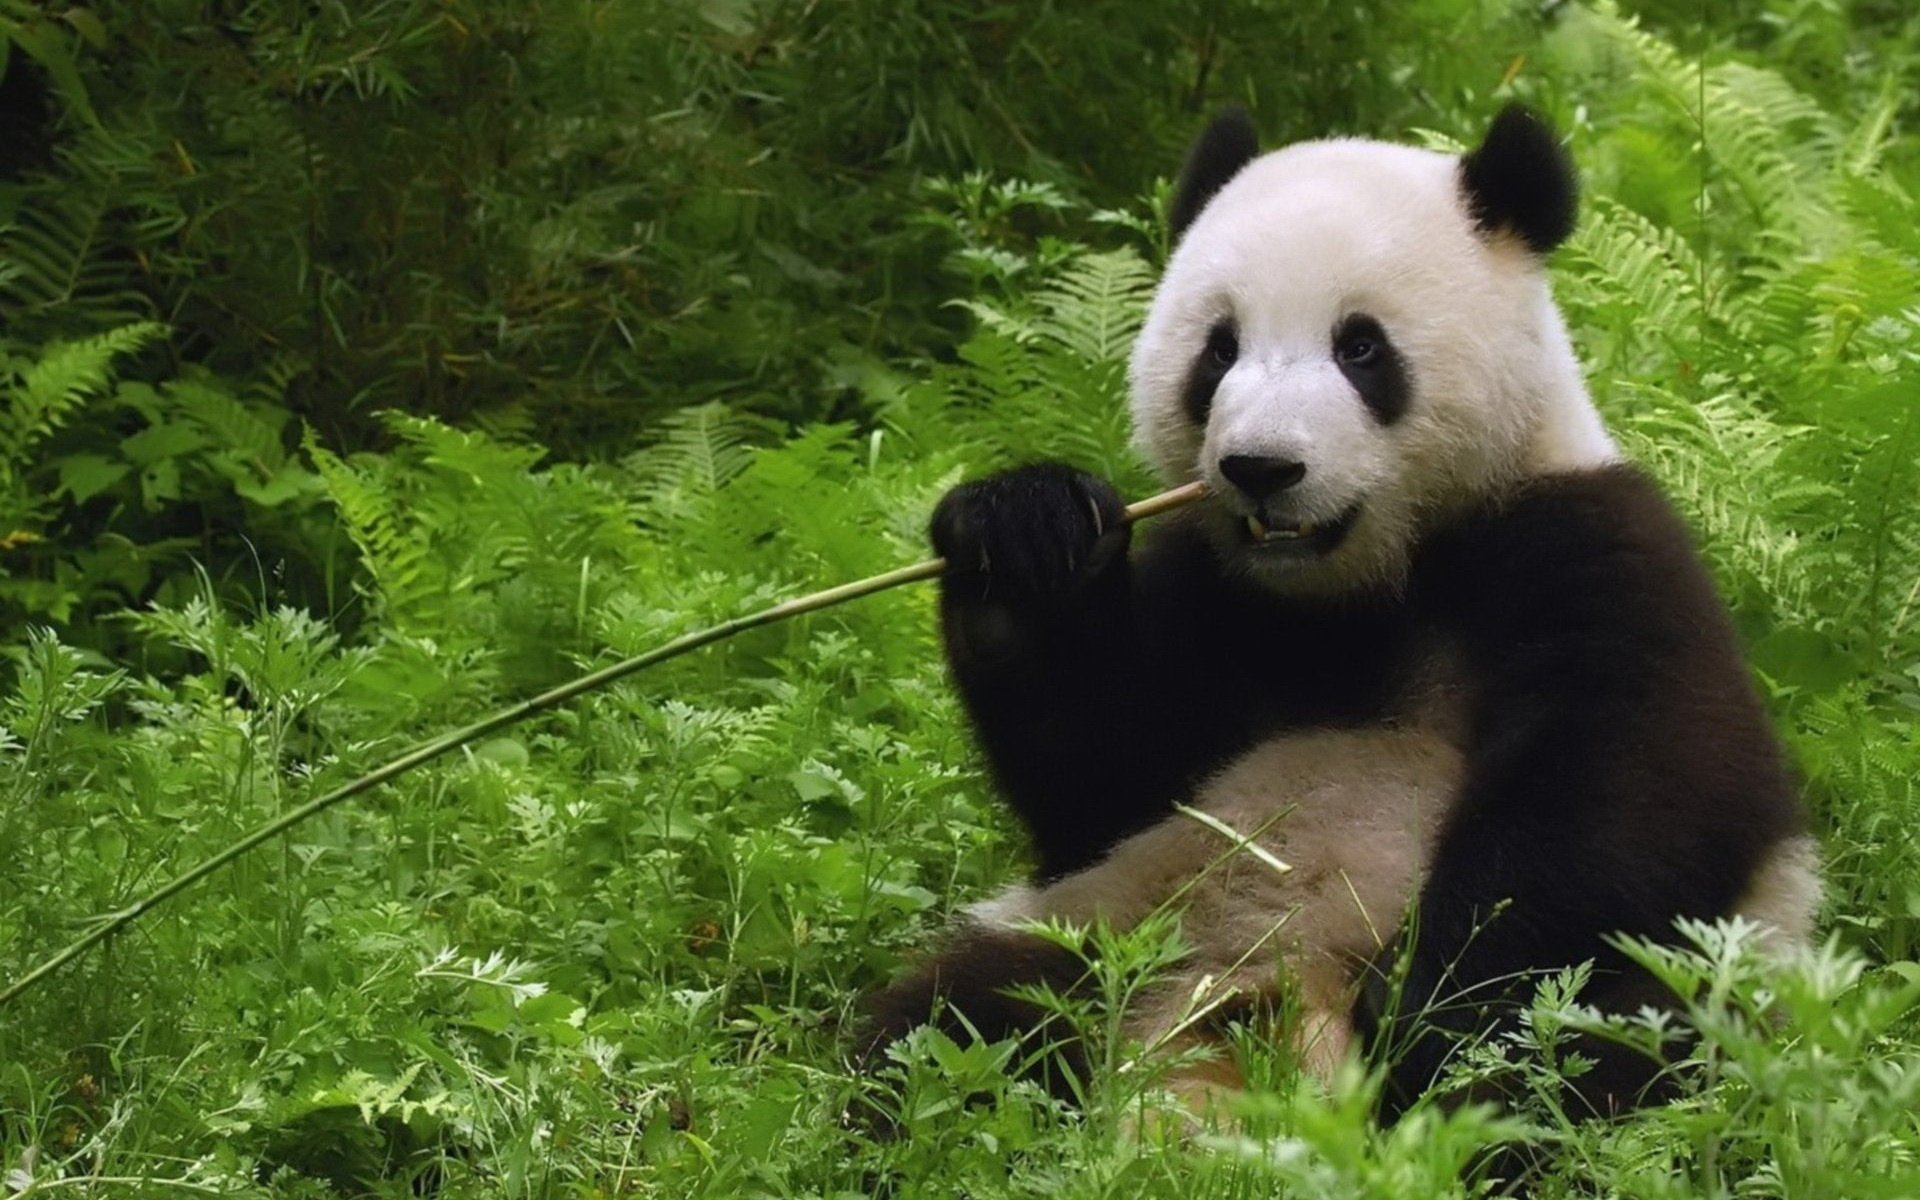 bamboo, Plants, Panda, Bears Wallpaper